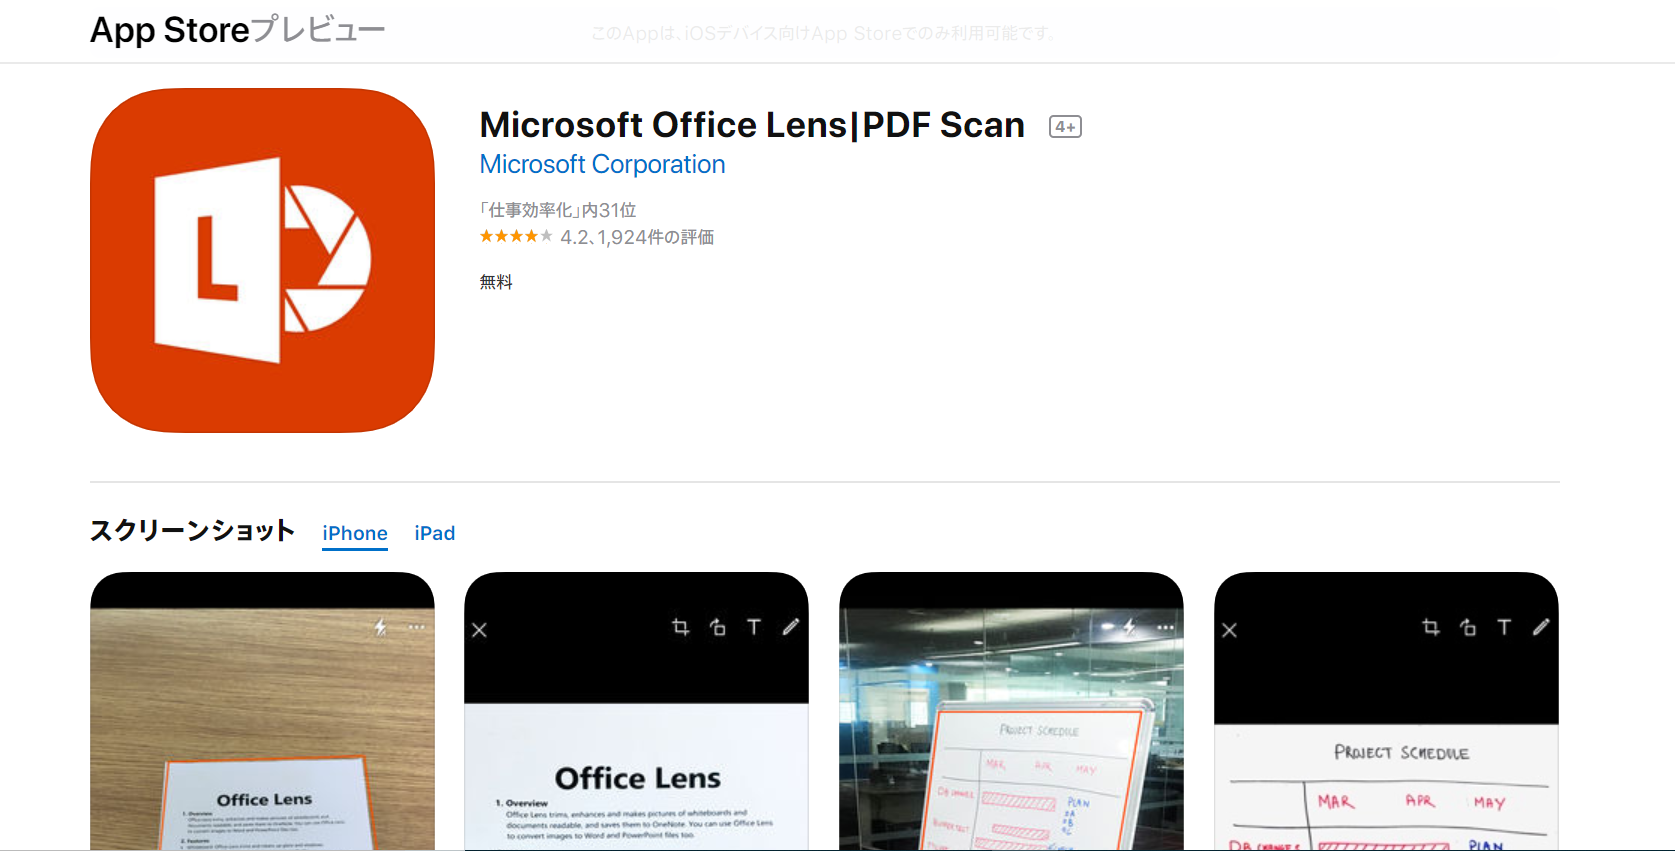 Microsoft Office Lens | PDF Scan